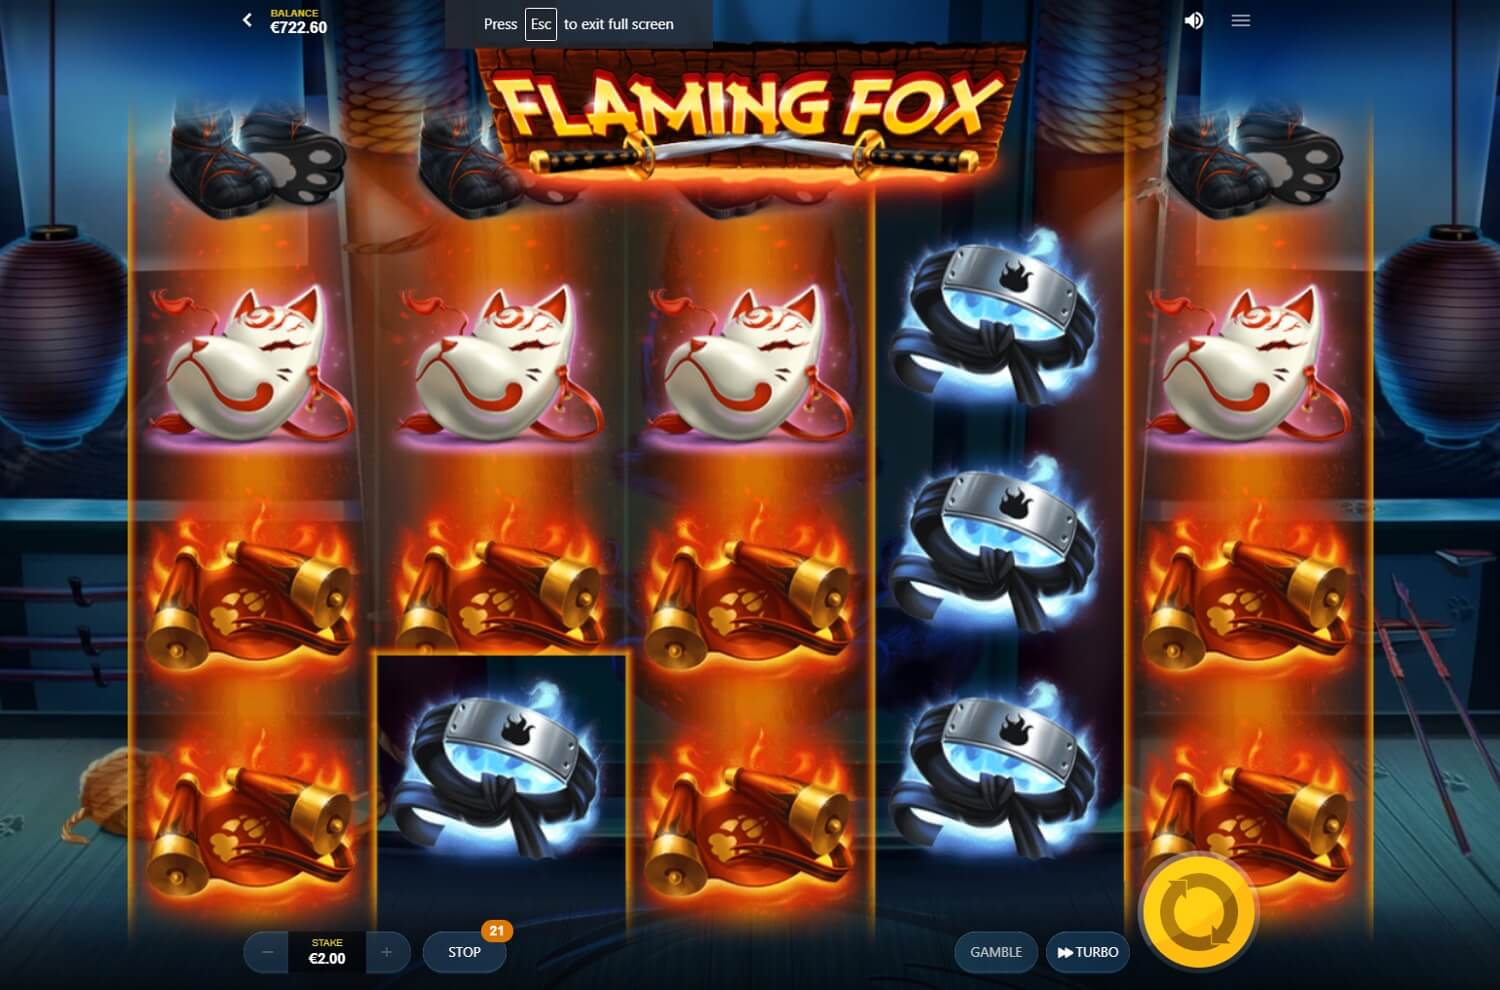 Flaming fox